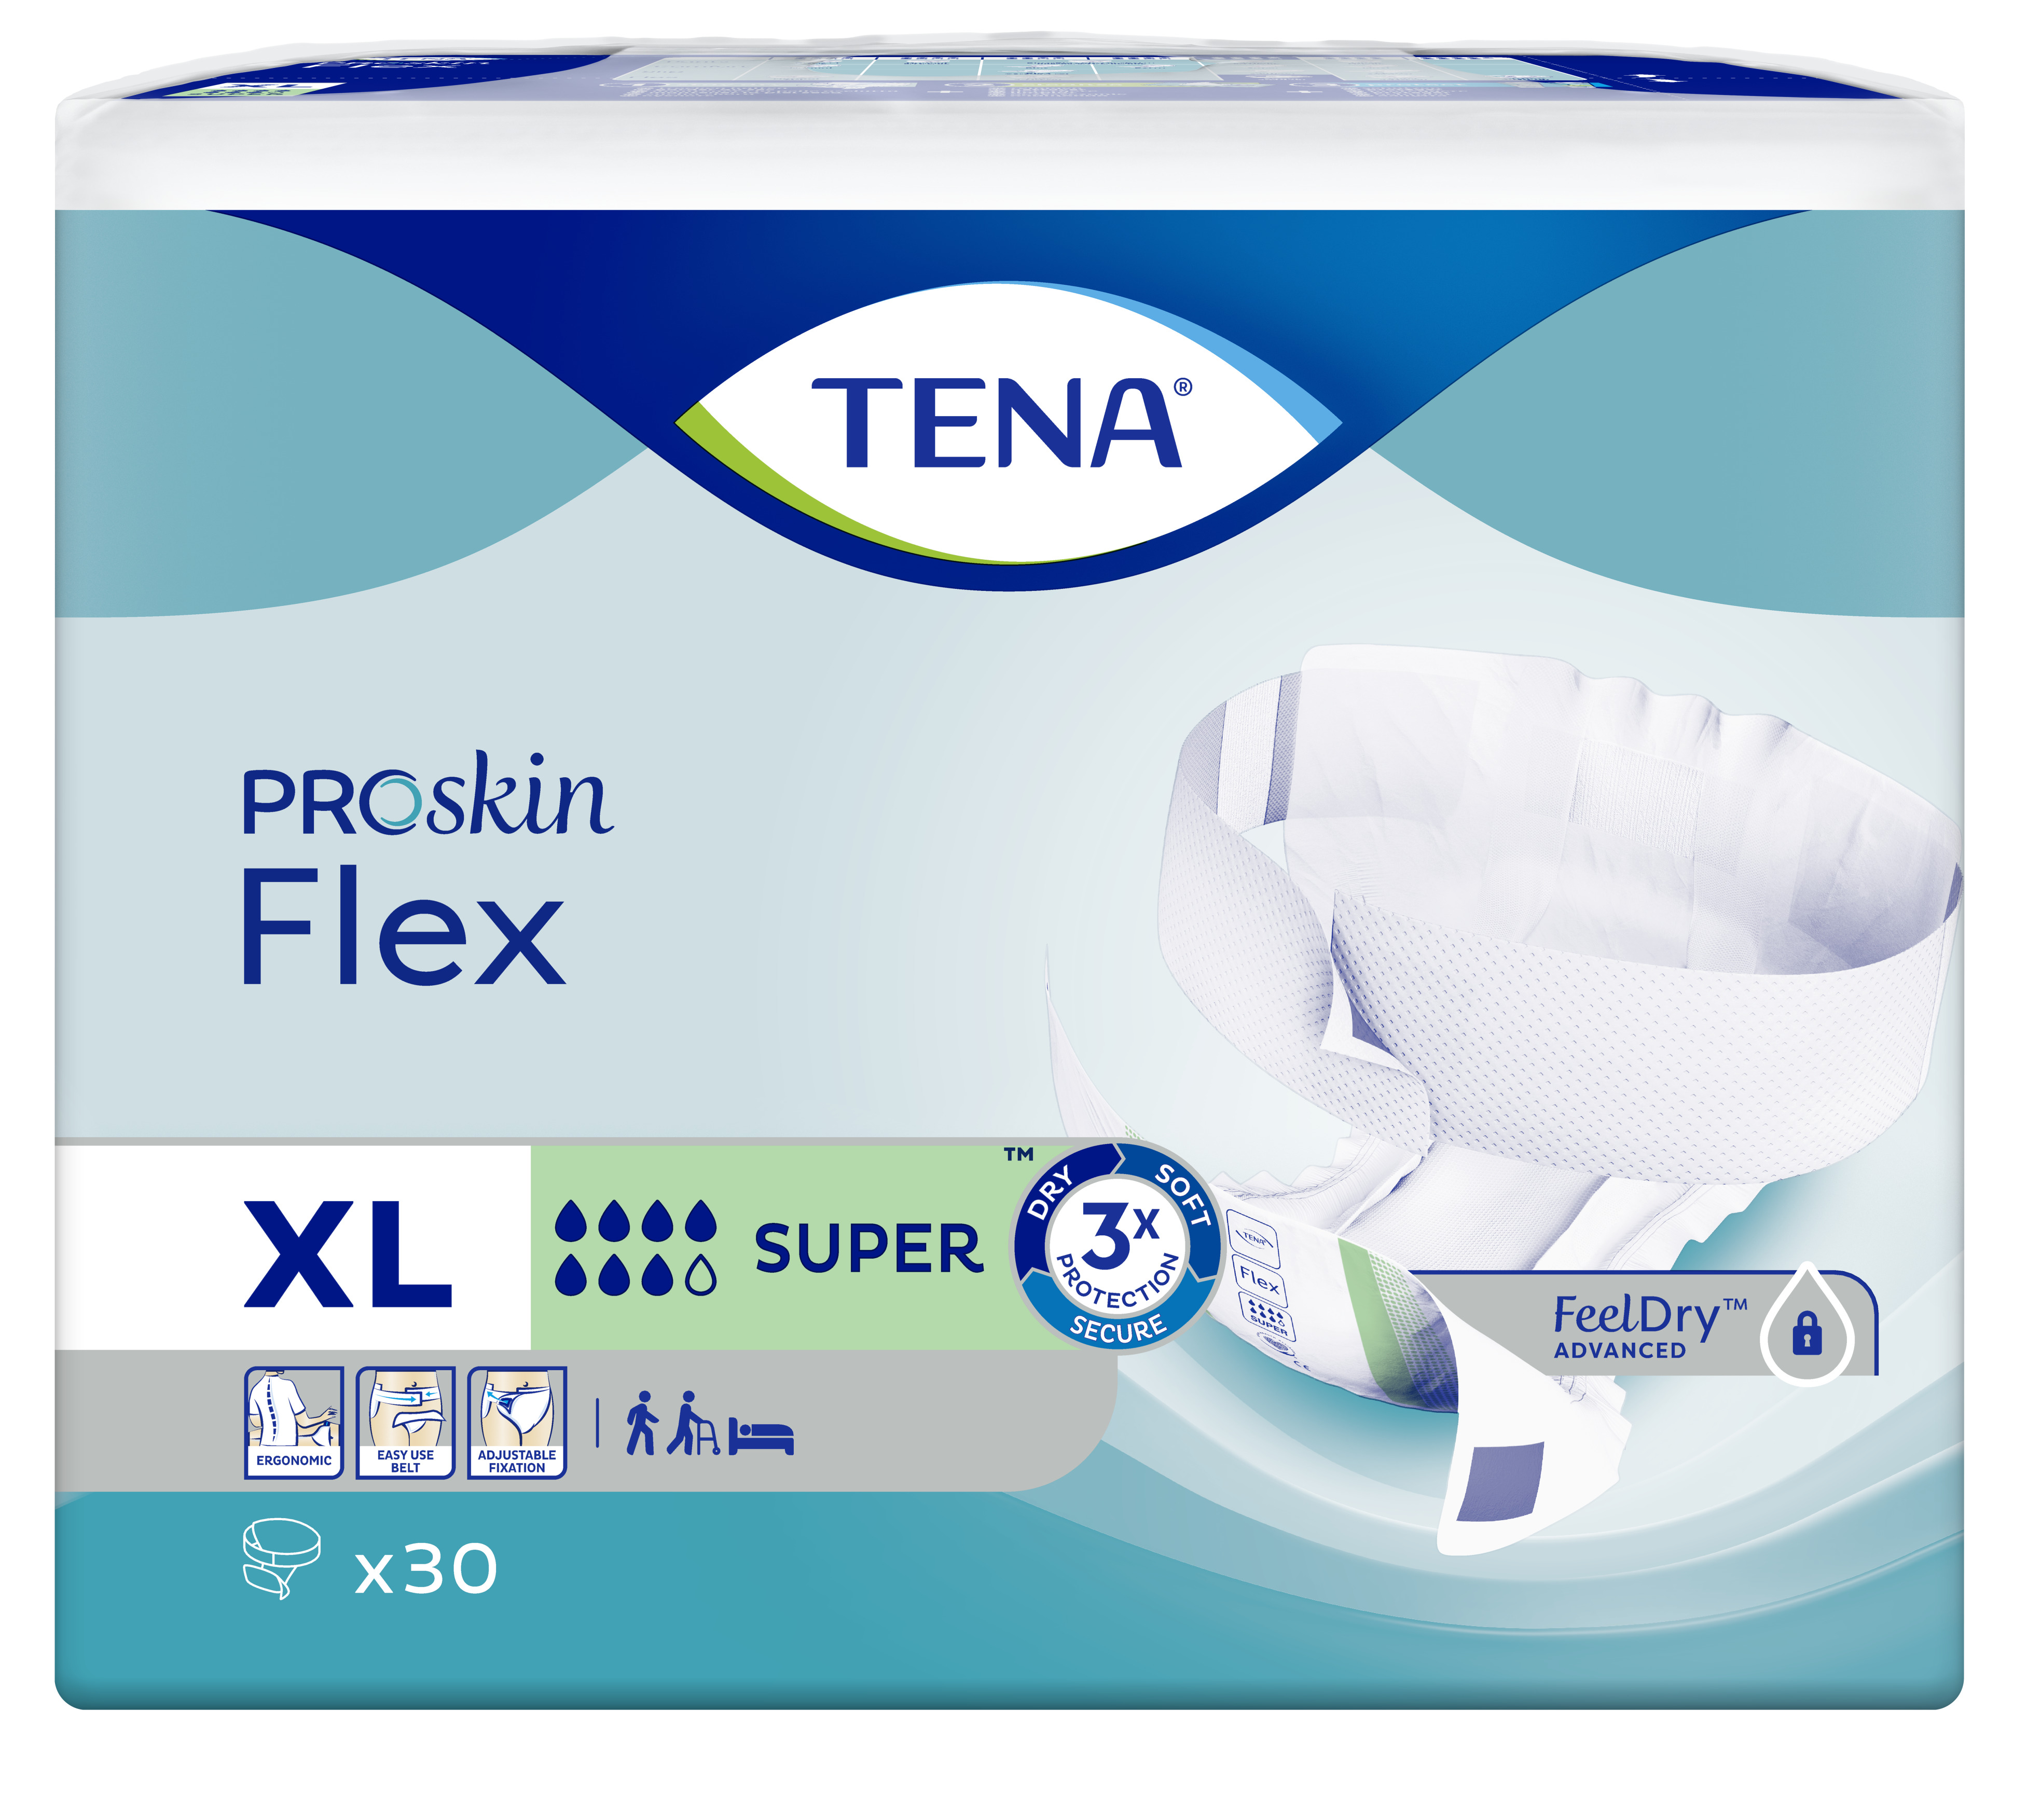 TENA PROskin Flex Super Extra Large 30s image 0